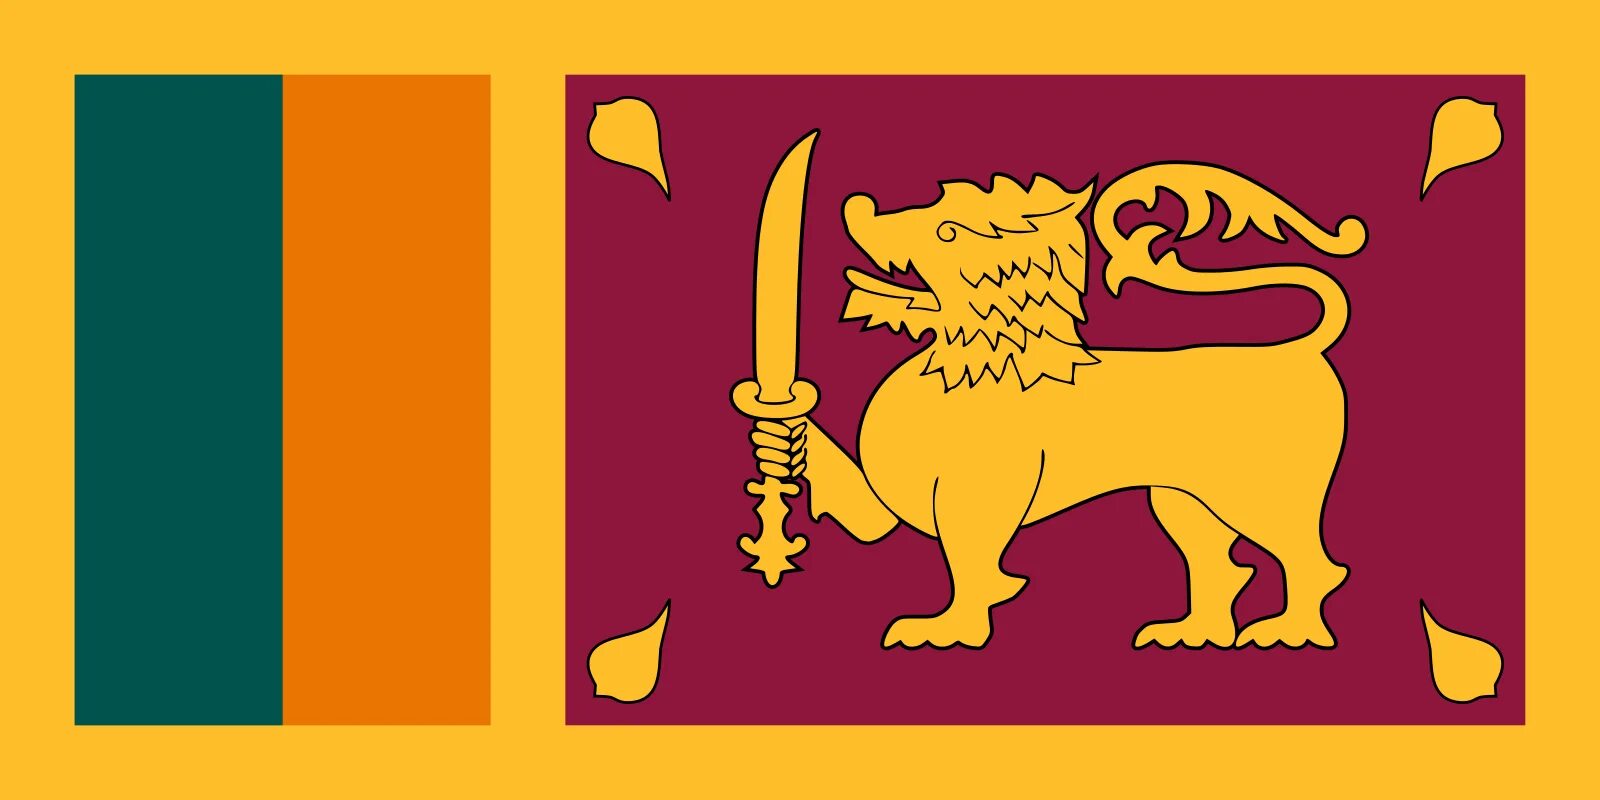 Флаг Шри Ланки. Флаг Цейлона. Альтернативный флаг Шри Ланки. Флаг Шри Джаяварденепура котте. Цвета шри ланки